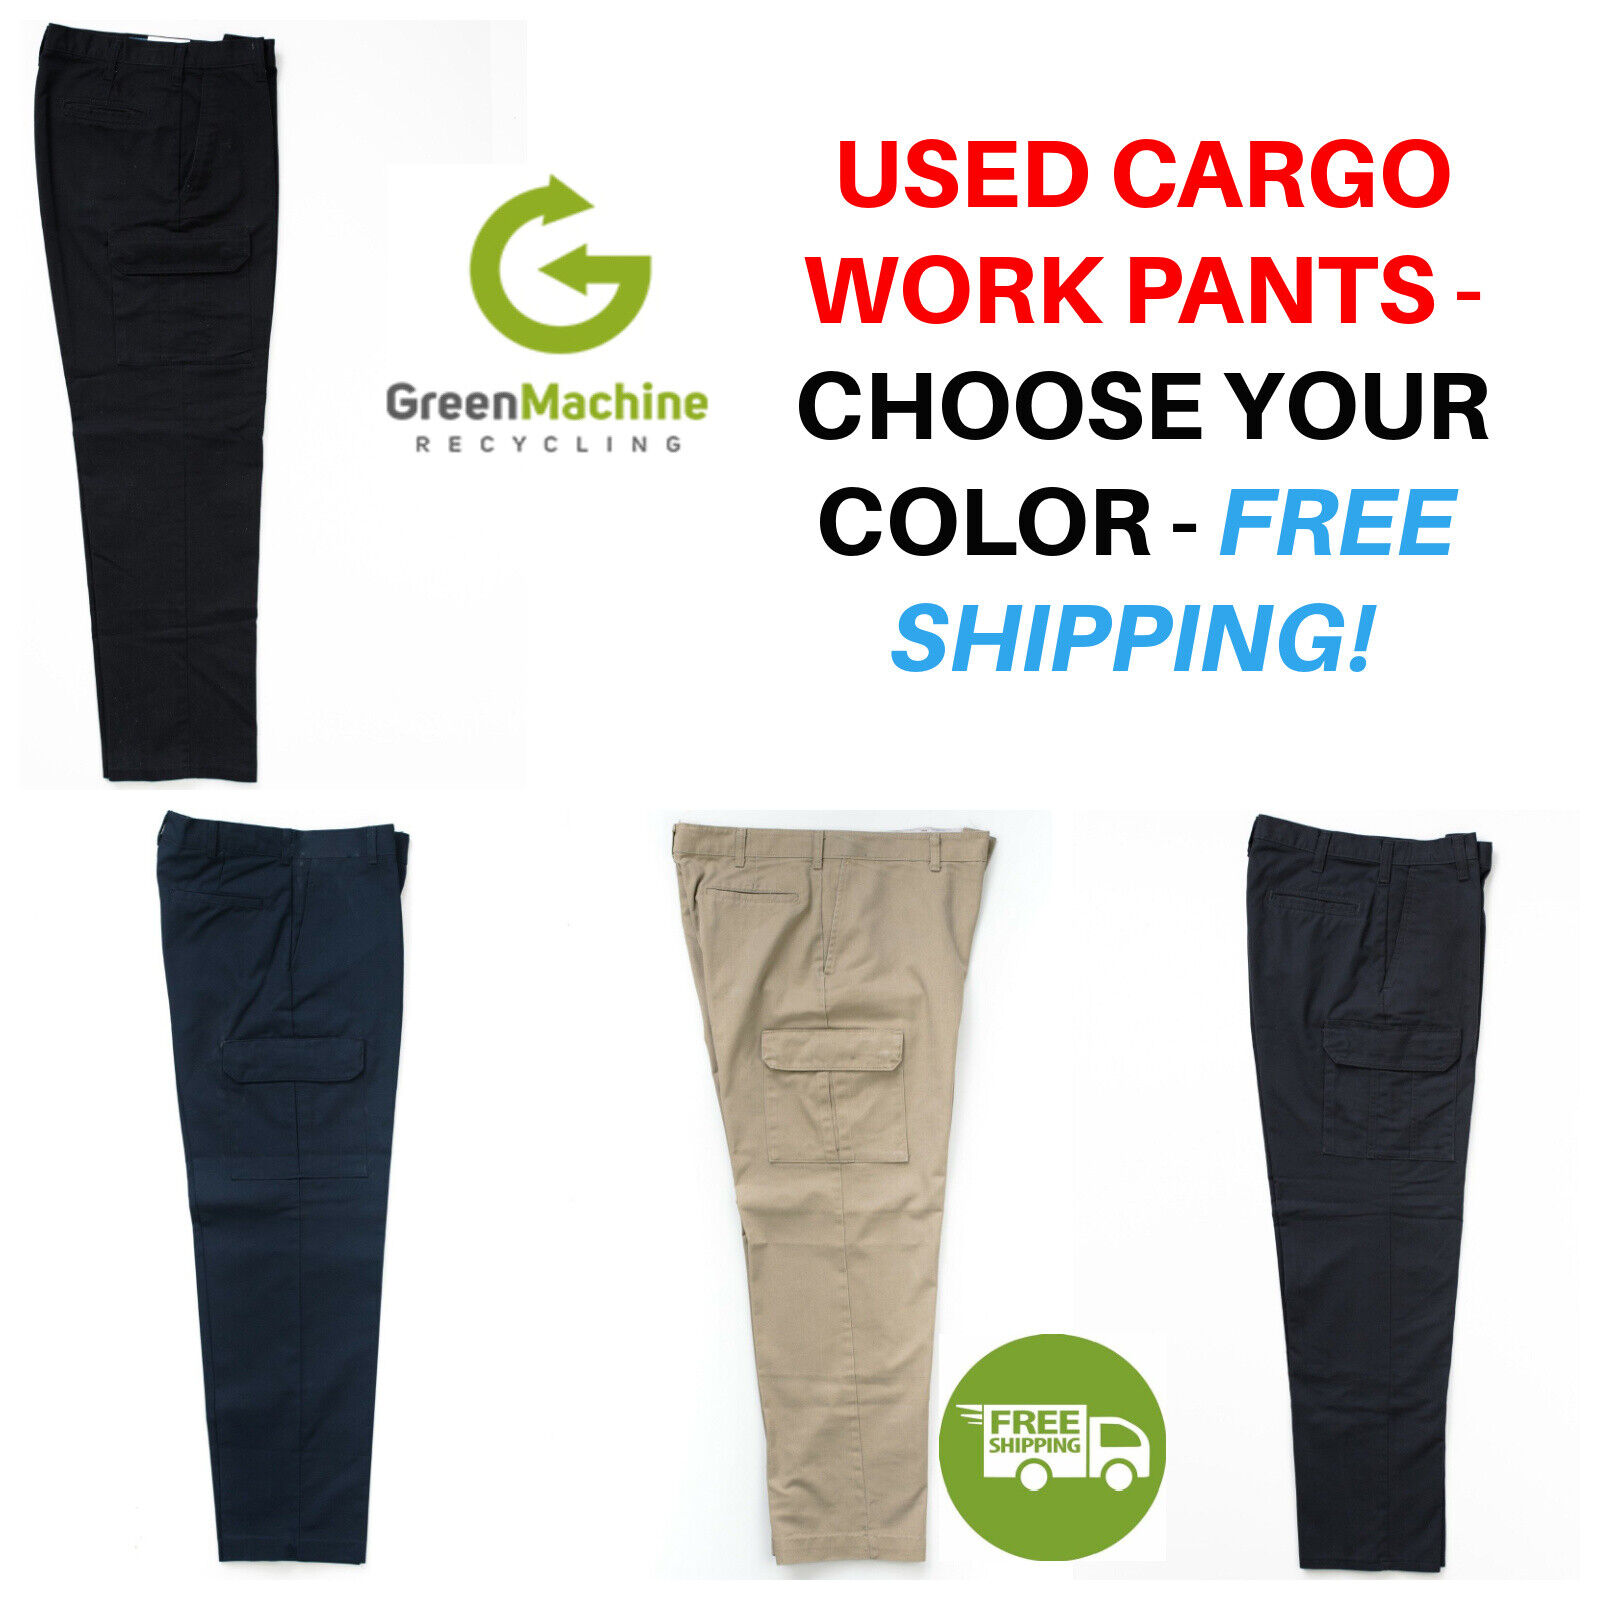 Used Uniform Work Pants Cargo Cintas Redkap Unifirst G&K Dickies etc 